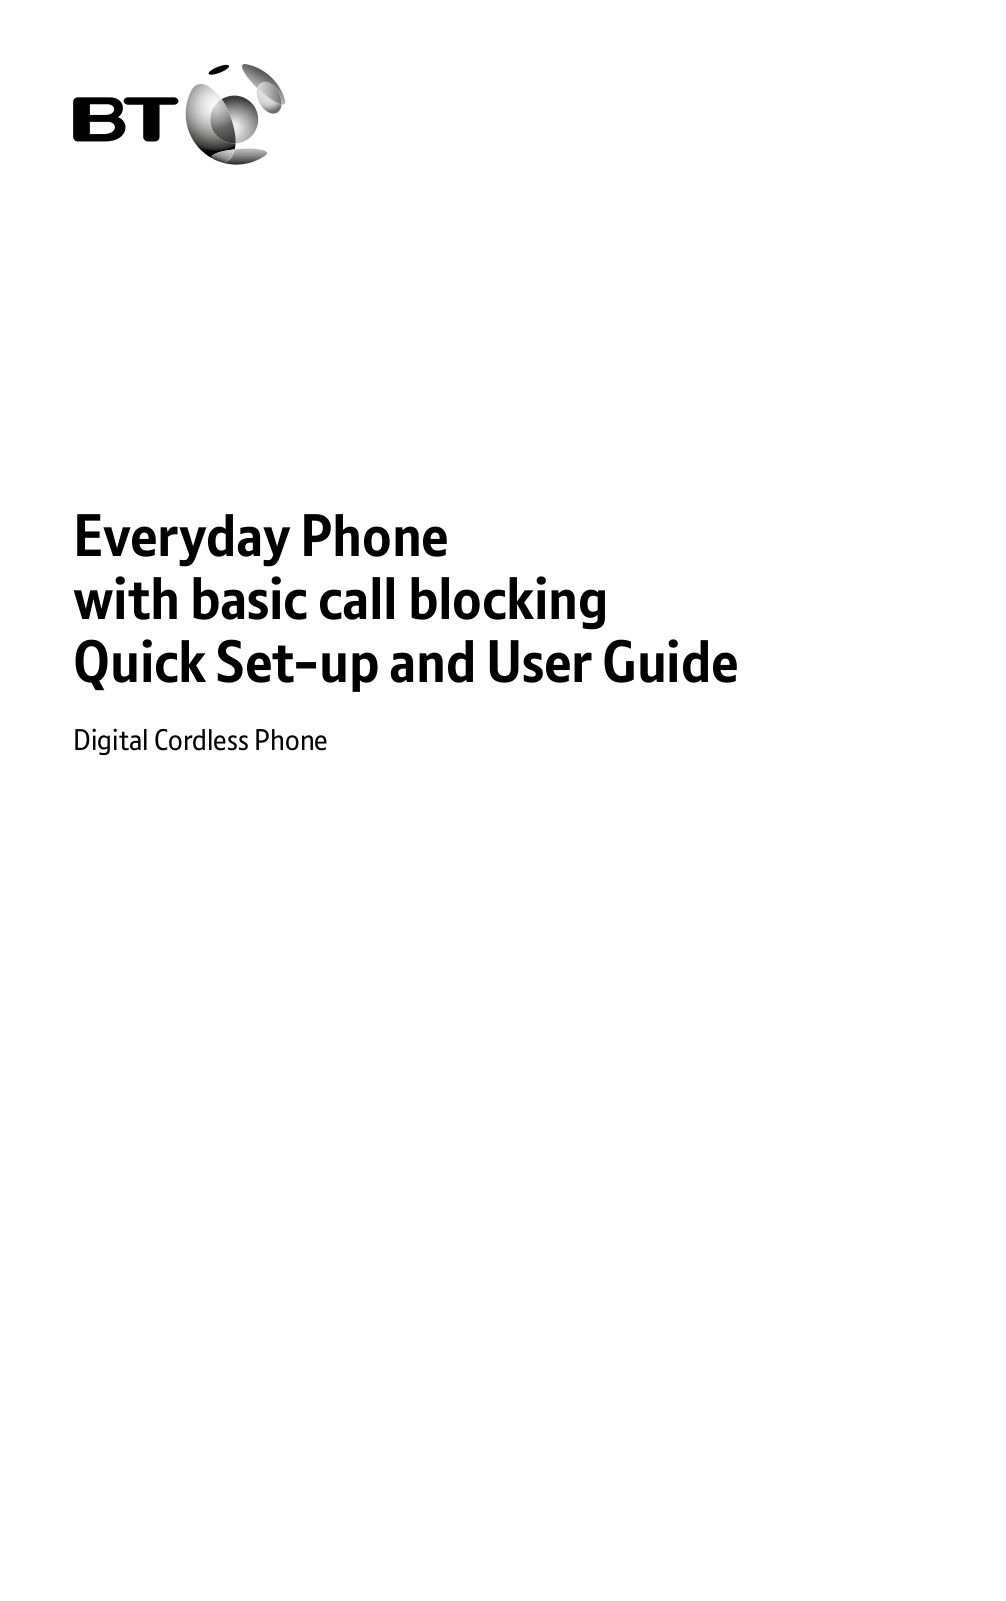 BT Everyday Phone with basic call blocking Instruction manual